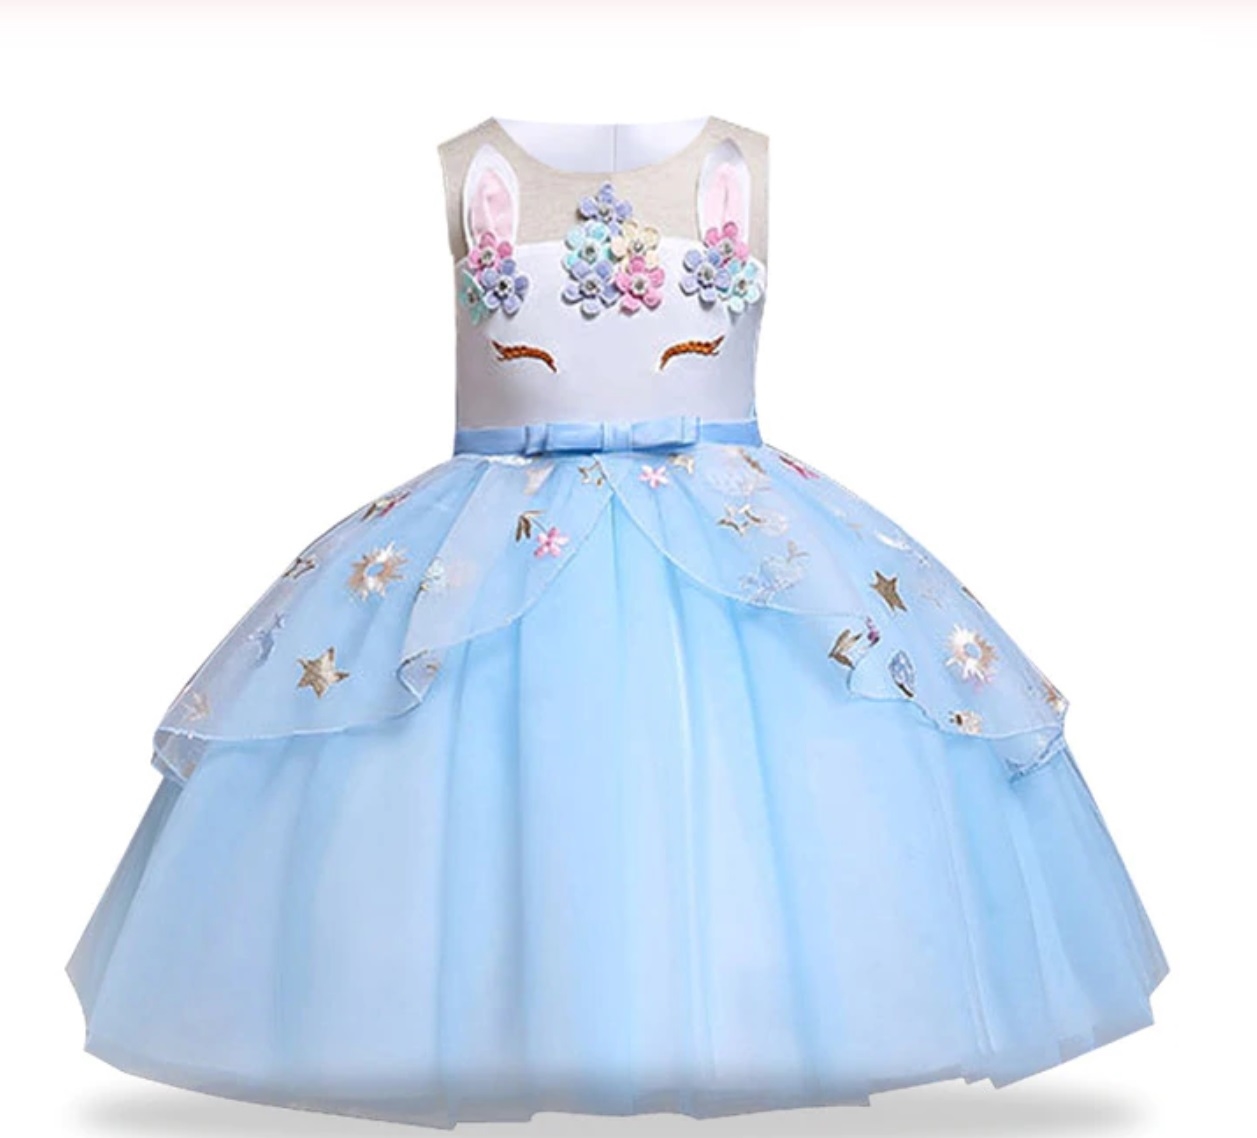 Unicorn kjole: Celestia kjole, - vi prinsessekjoler